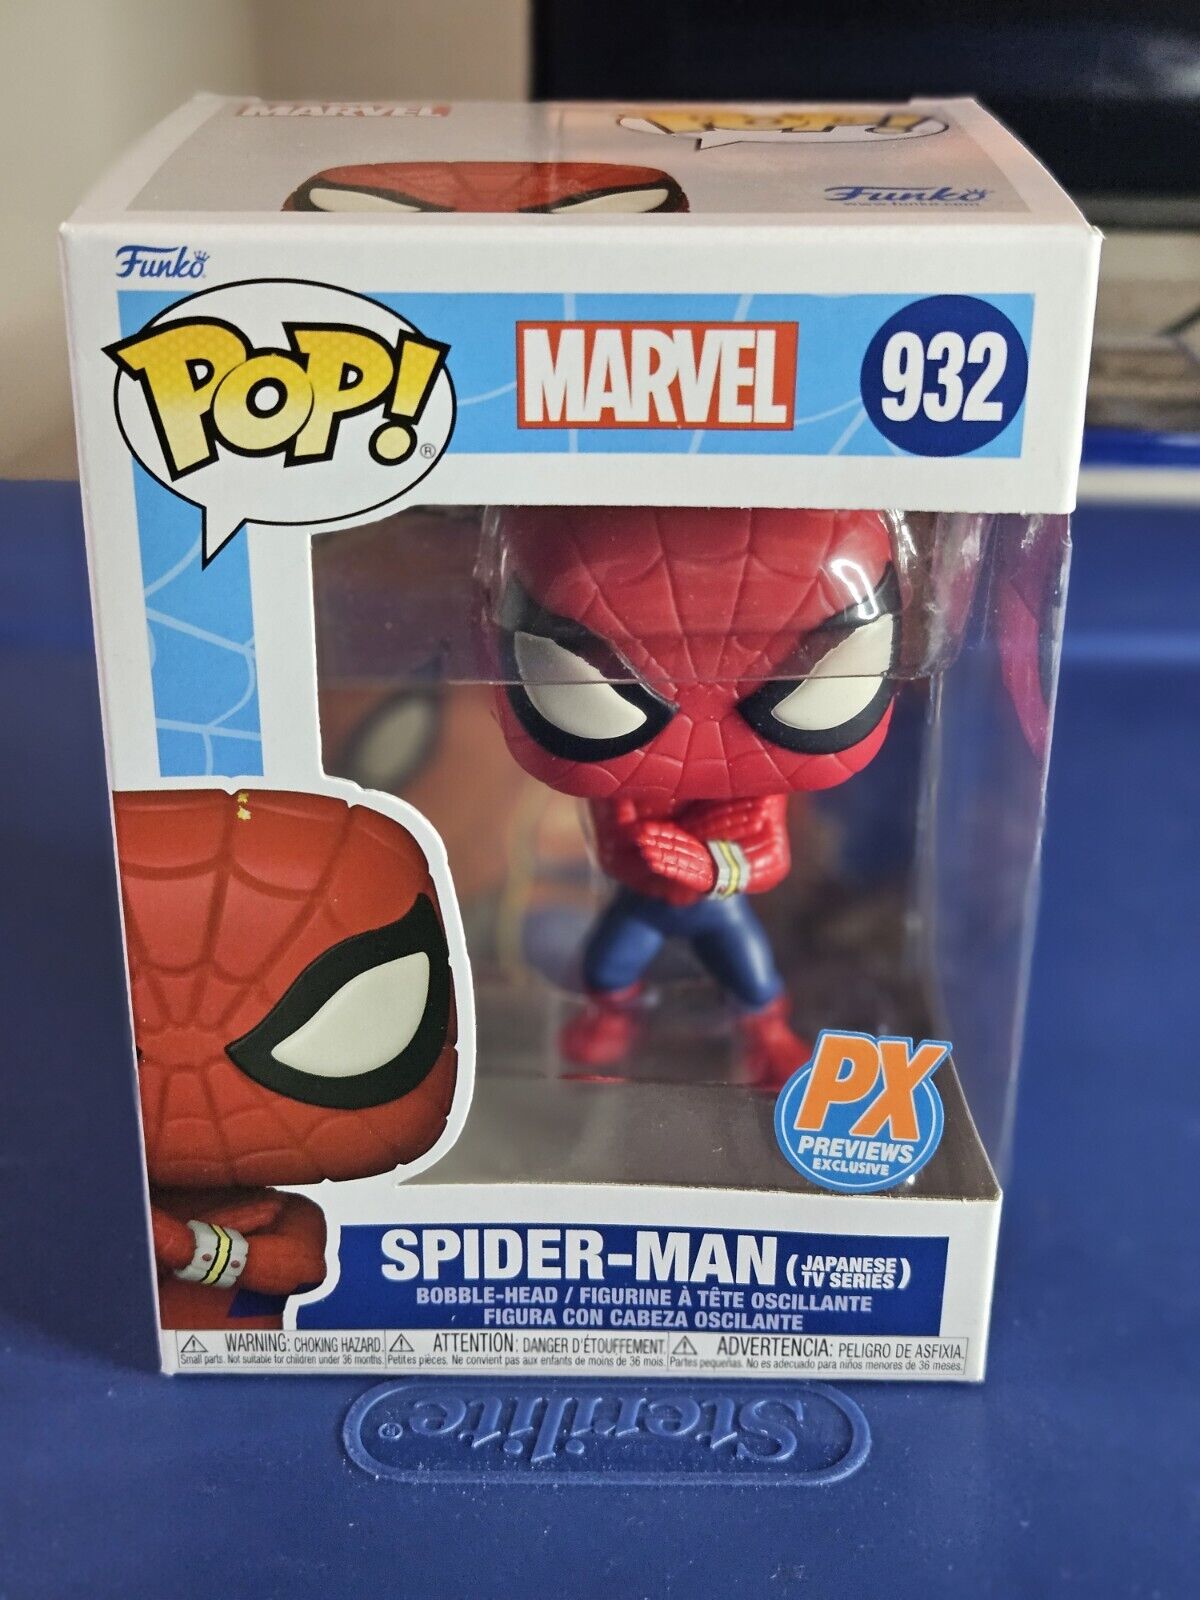 Funko Pop Marvel - Spider-Man (Japanese TV Series) - 932